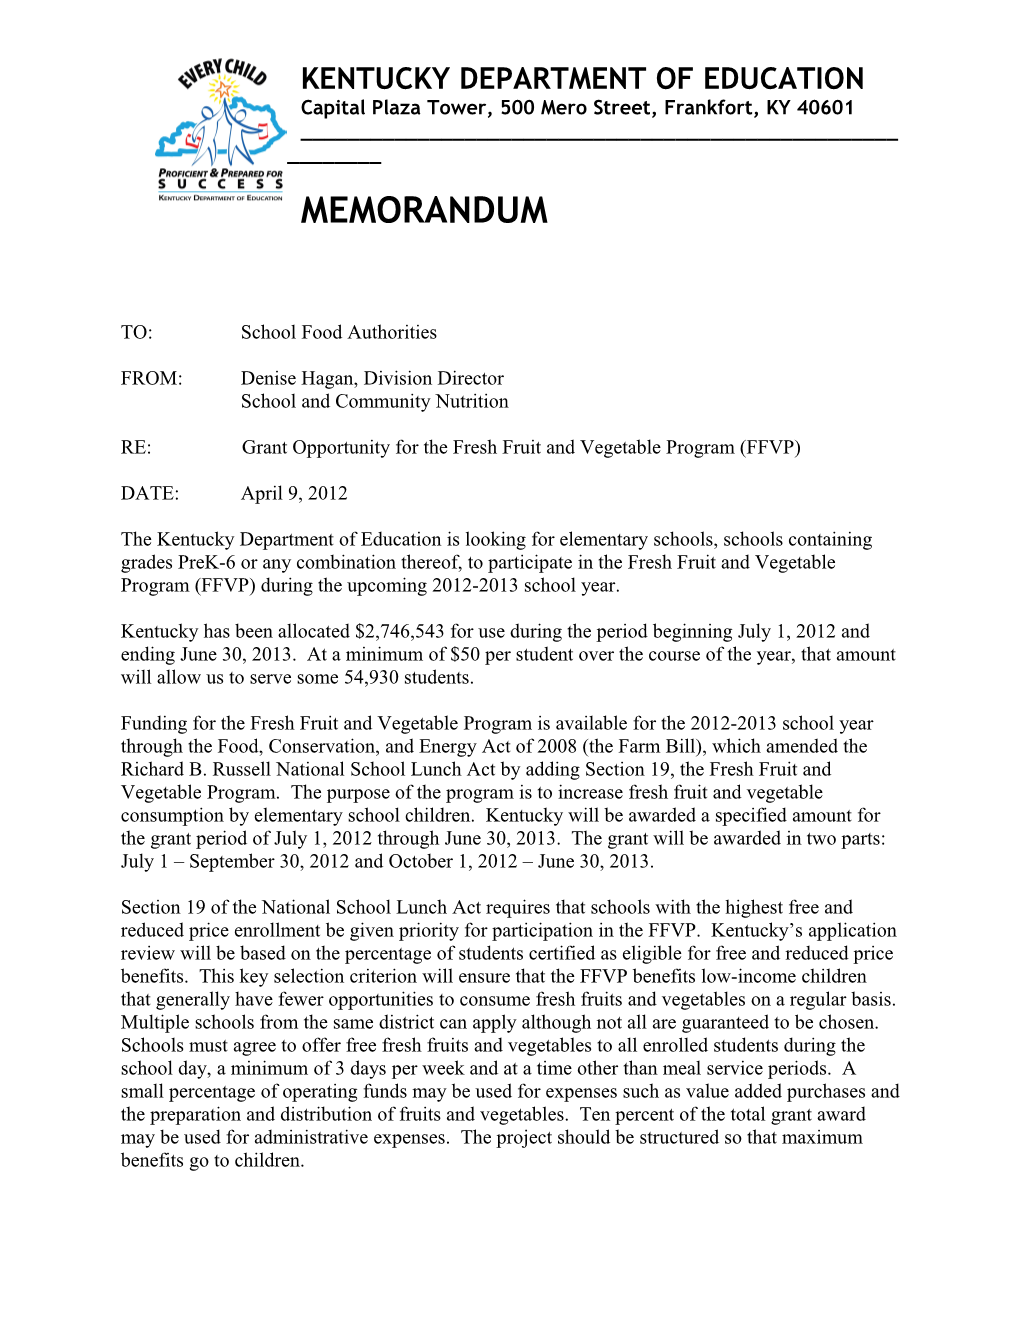 FFVP Letter to Superintendents